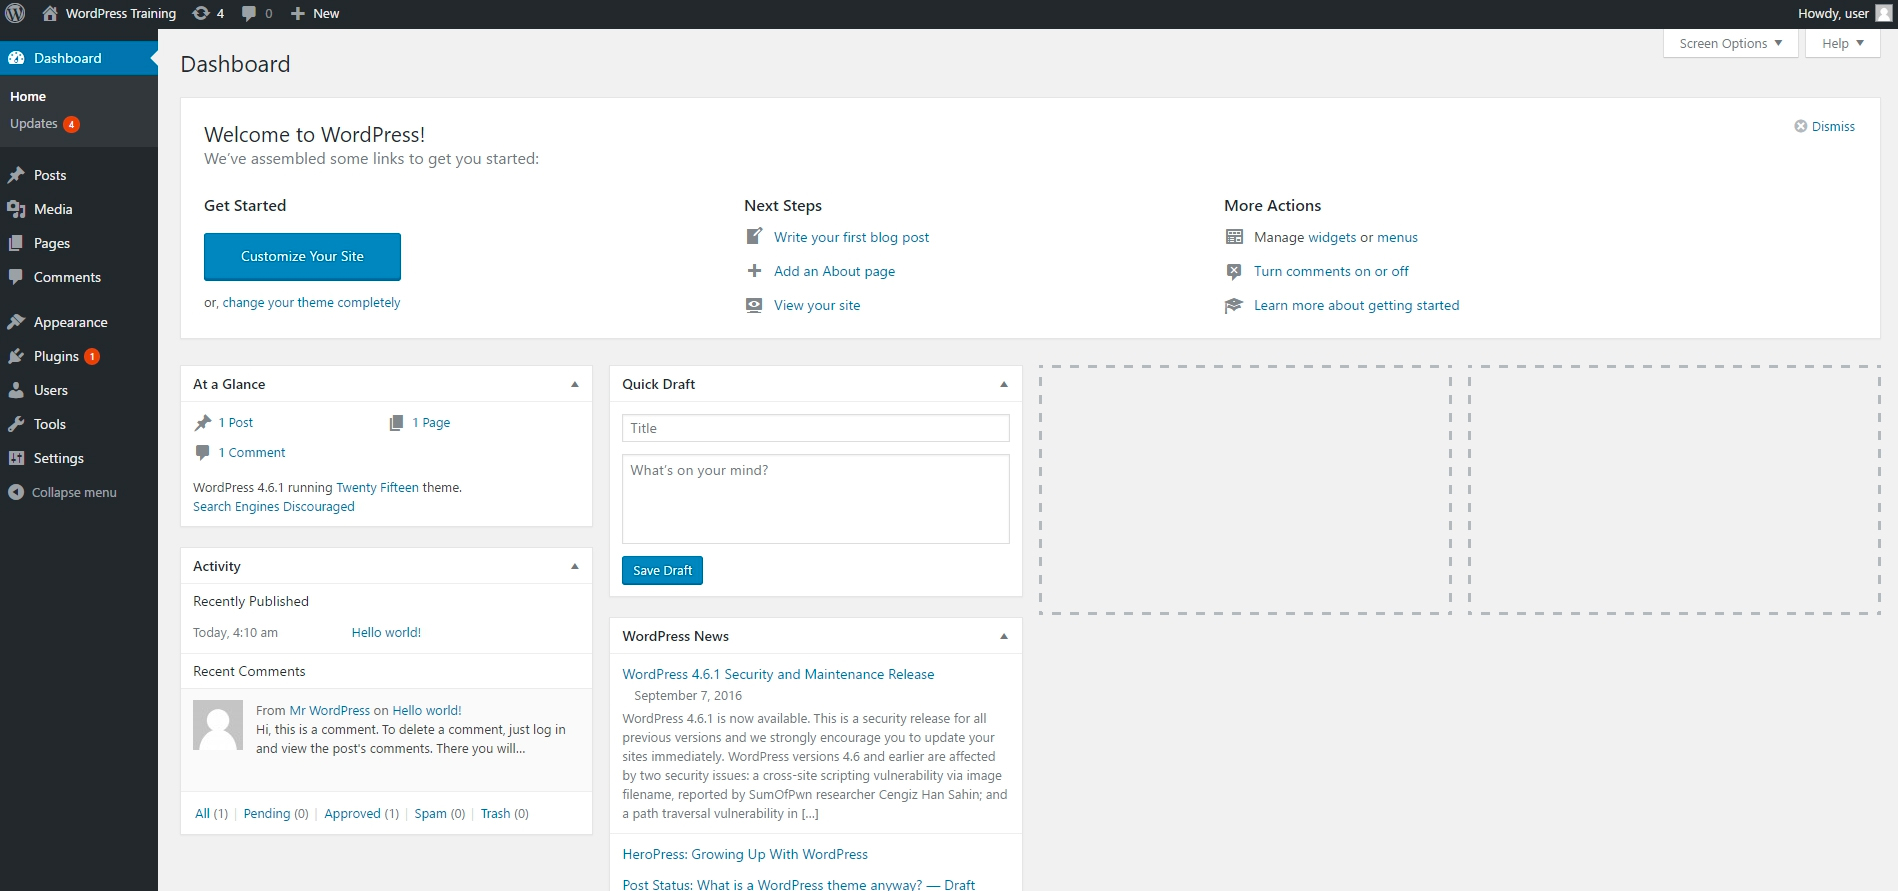 WordPress Tutorial - WP Dashboard Image